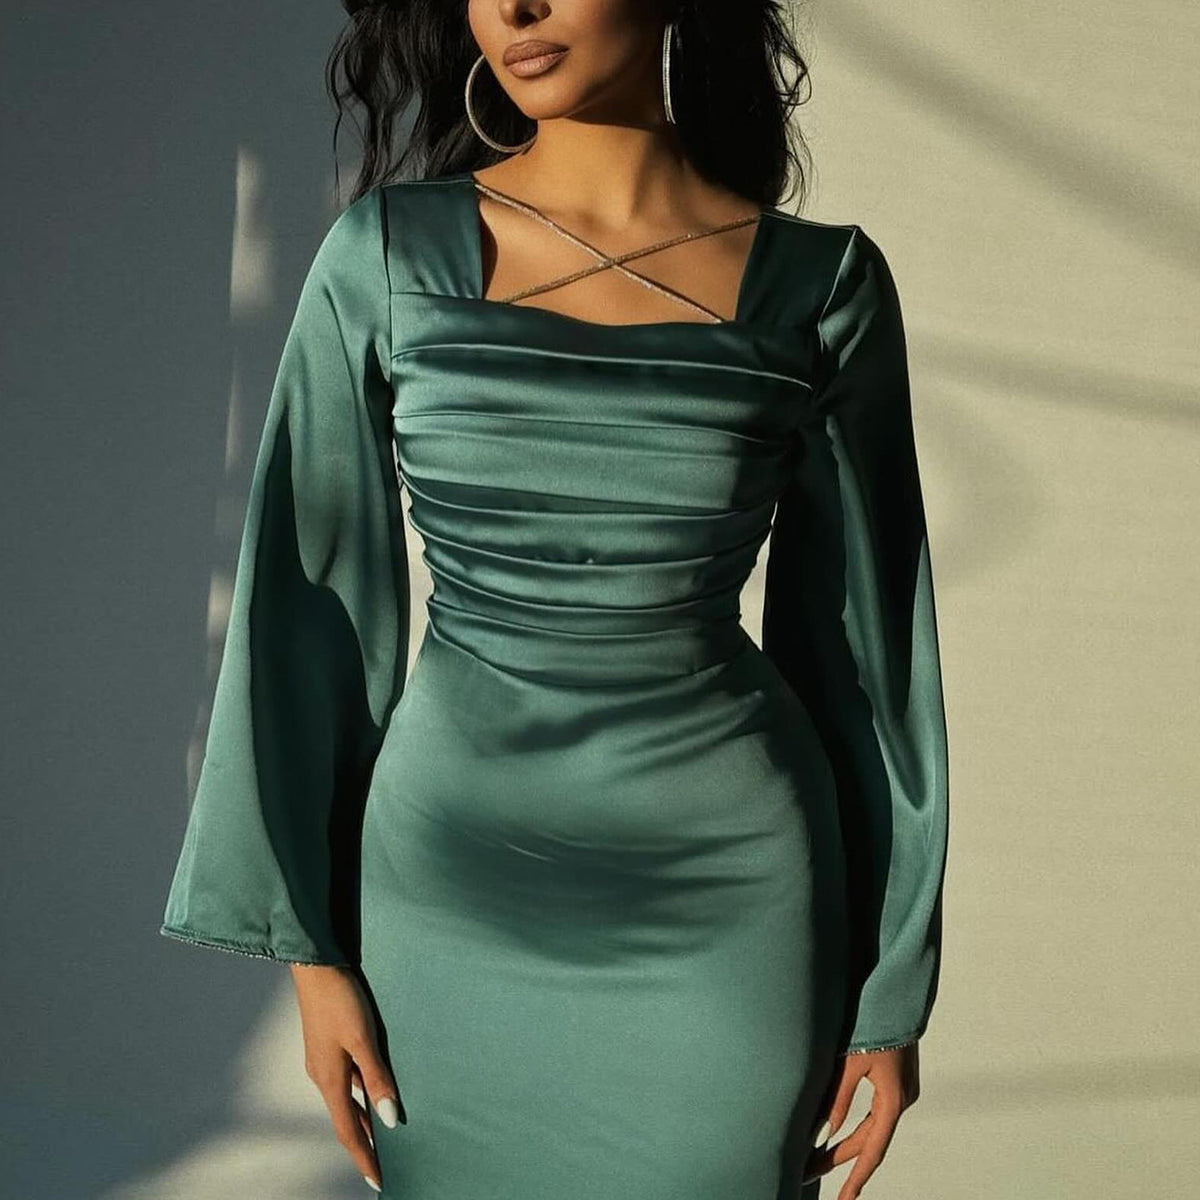 Sharon Said Emerald Green Short Arabic Evening Dress Long Sleeves Black White Midi Wedding Formal Party Bridesmaid Dress SF028